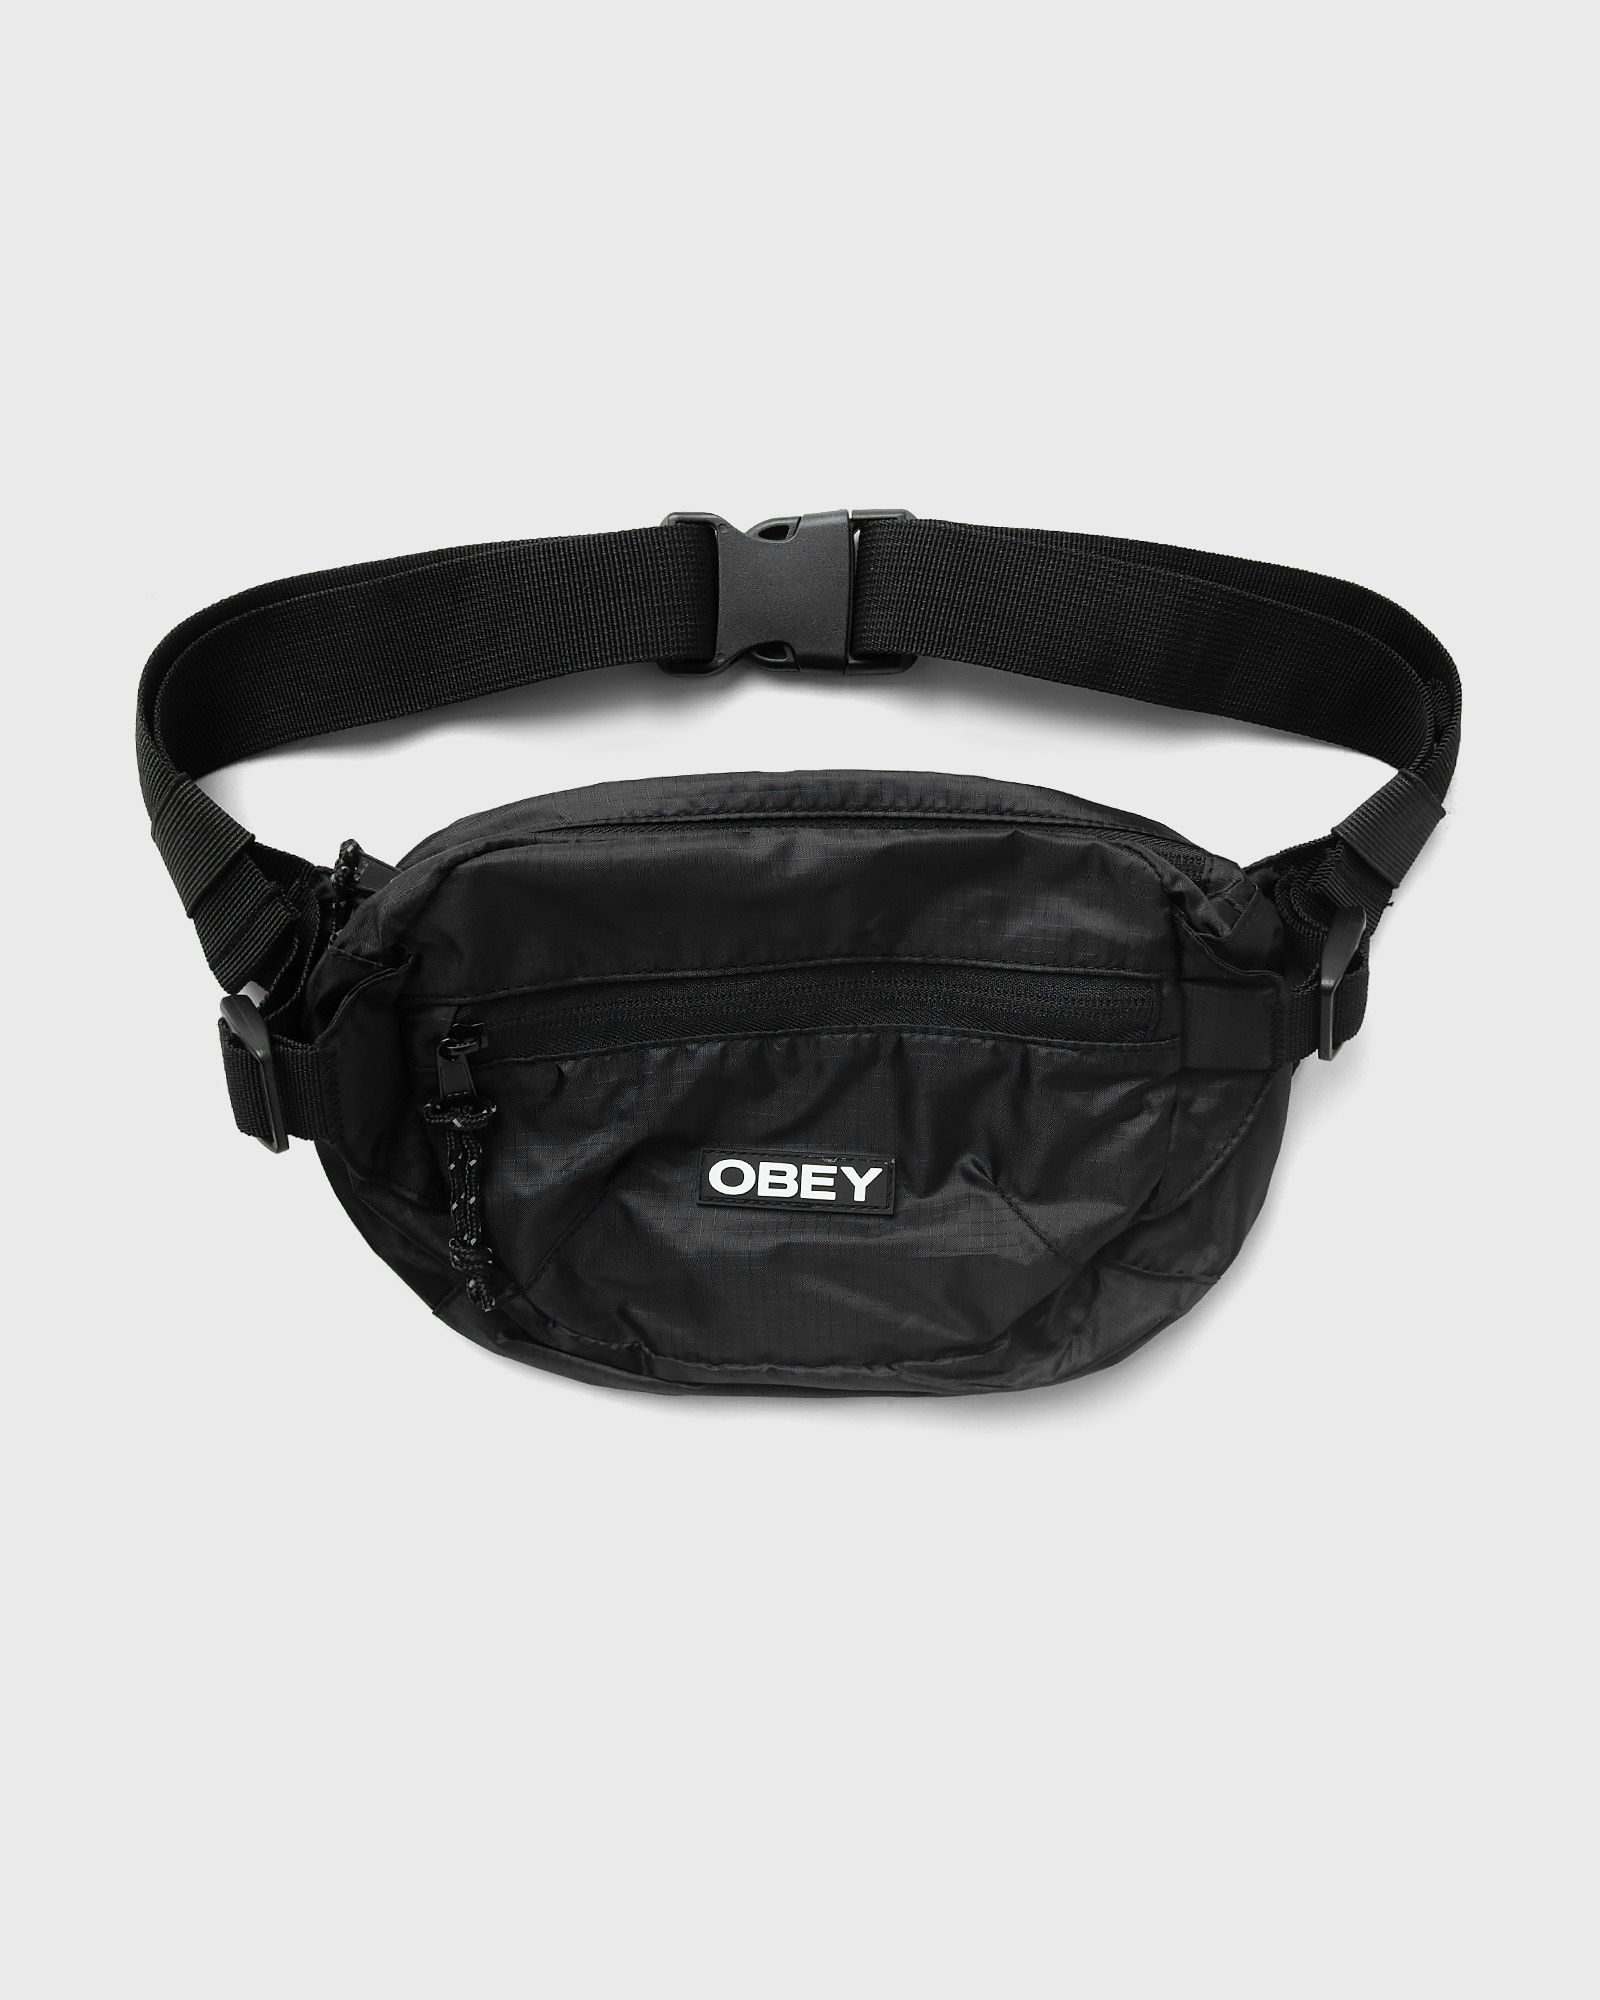 Obey - commuter waist bag men messenger & crossbody bags black in größe:one size